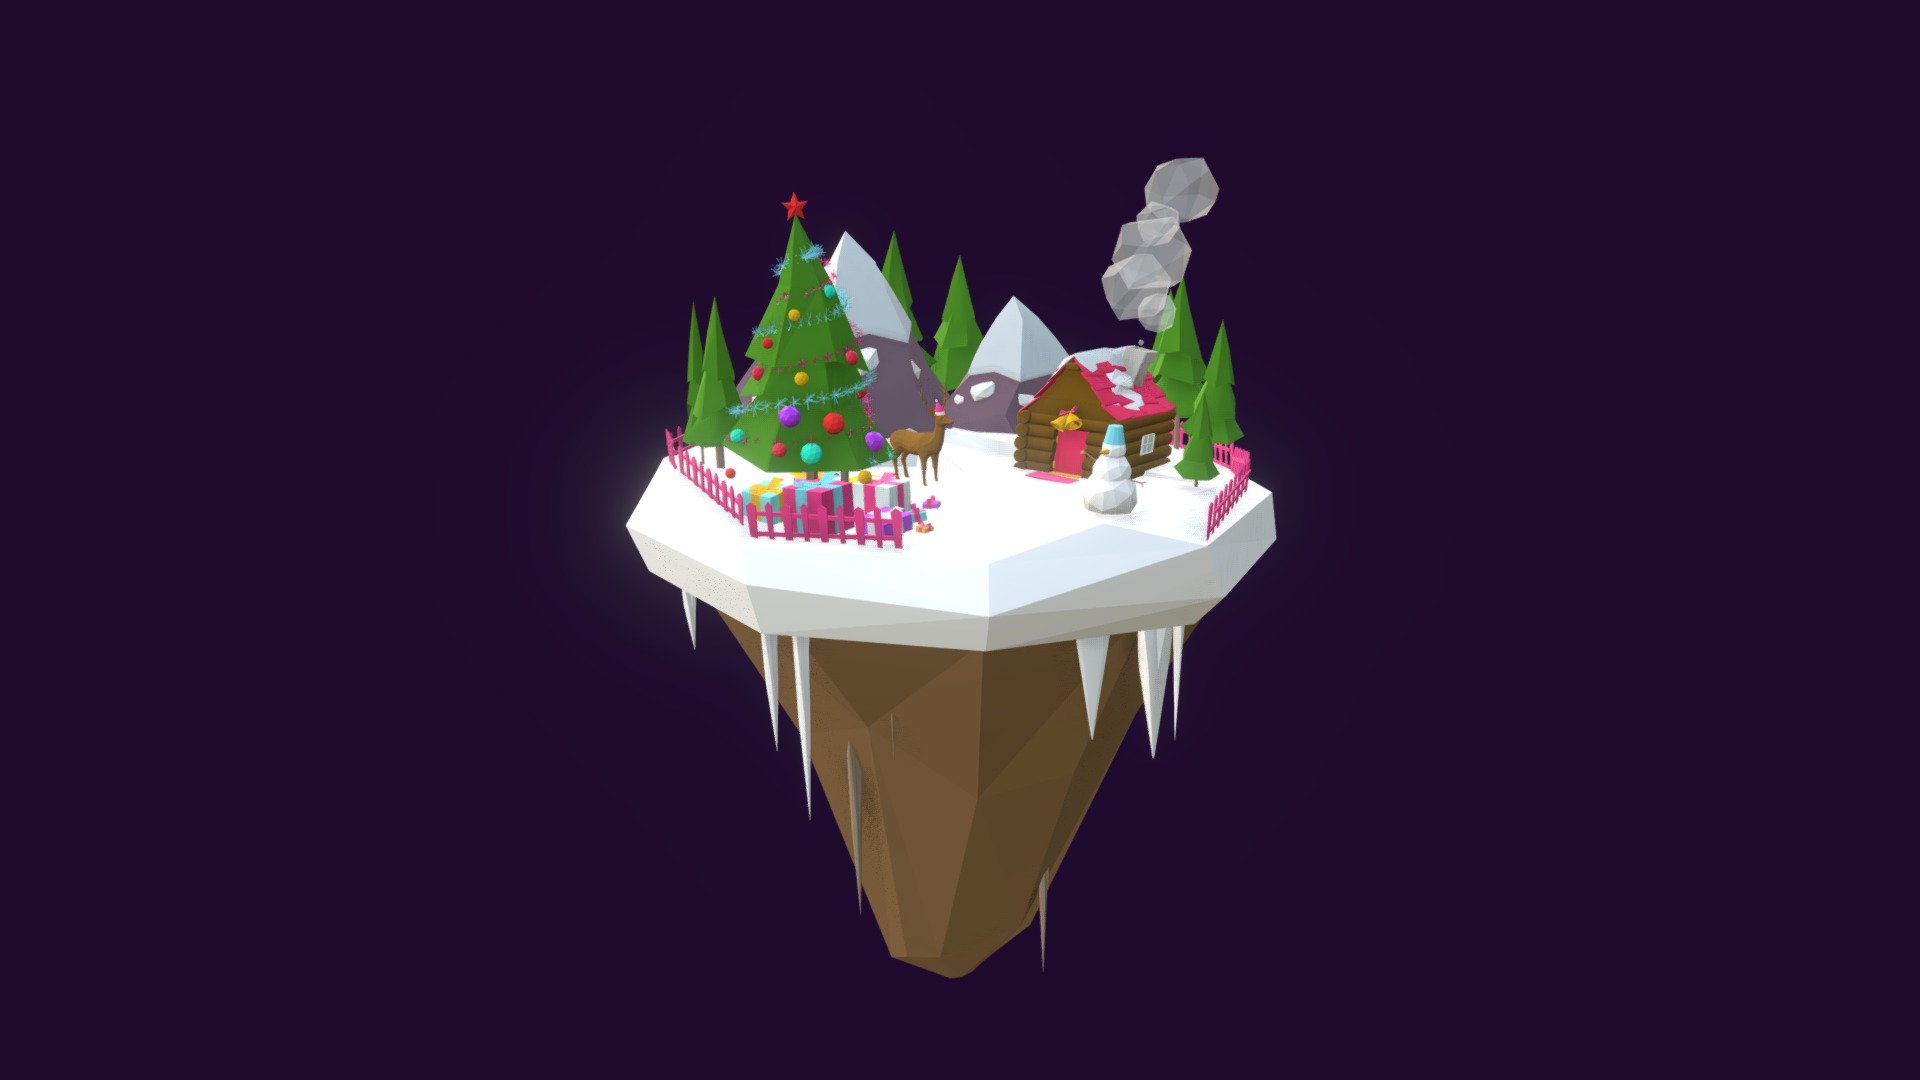 Cartoon Low poly Сhristmas Winter Island 3d illustration. 
Created on Cinema 4d r17 
9053 Polygons
 - Low Poly Christmas Island - Buy Royalty Free 3D model by antonmoek 3d model